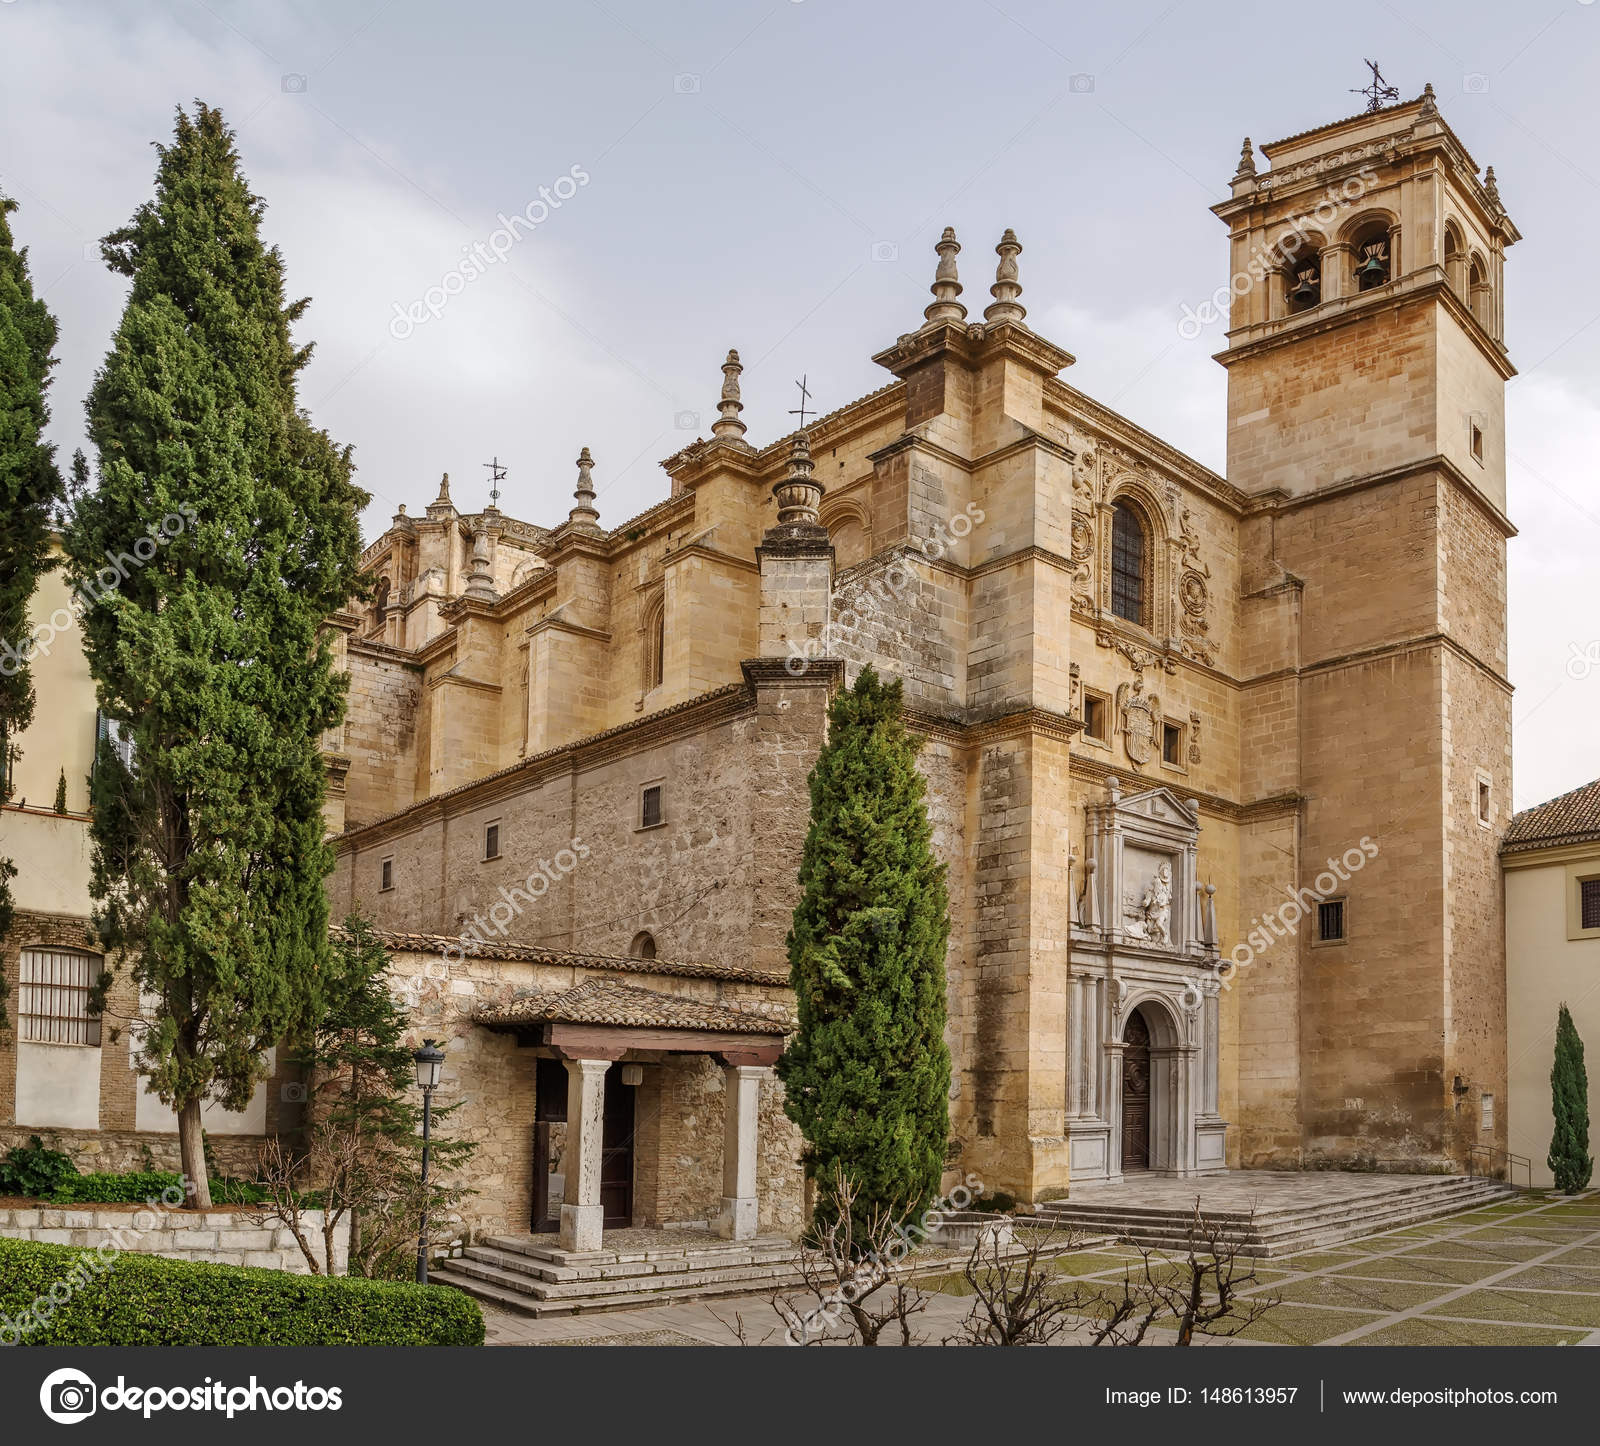 Monasterio De San Jerónimo - Games 2018 - 1600 x 1446 jpeg 443kB